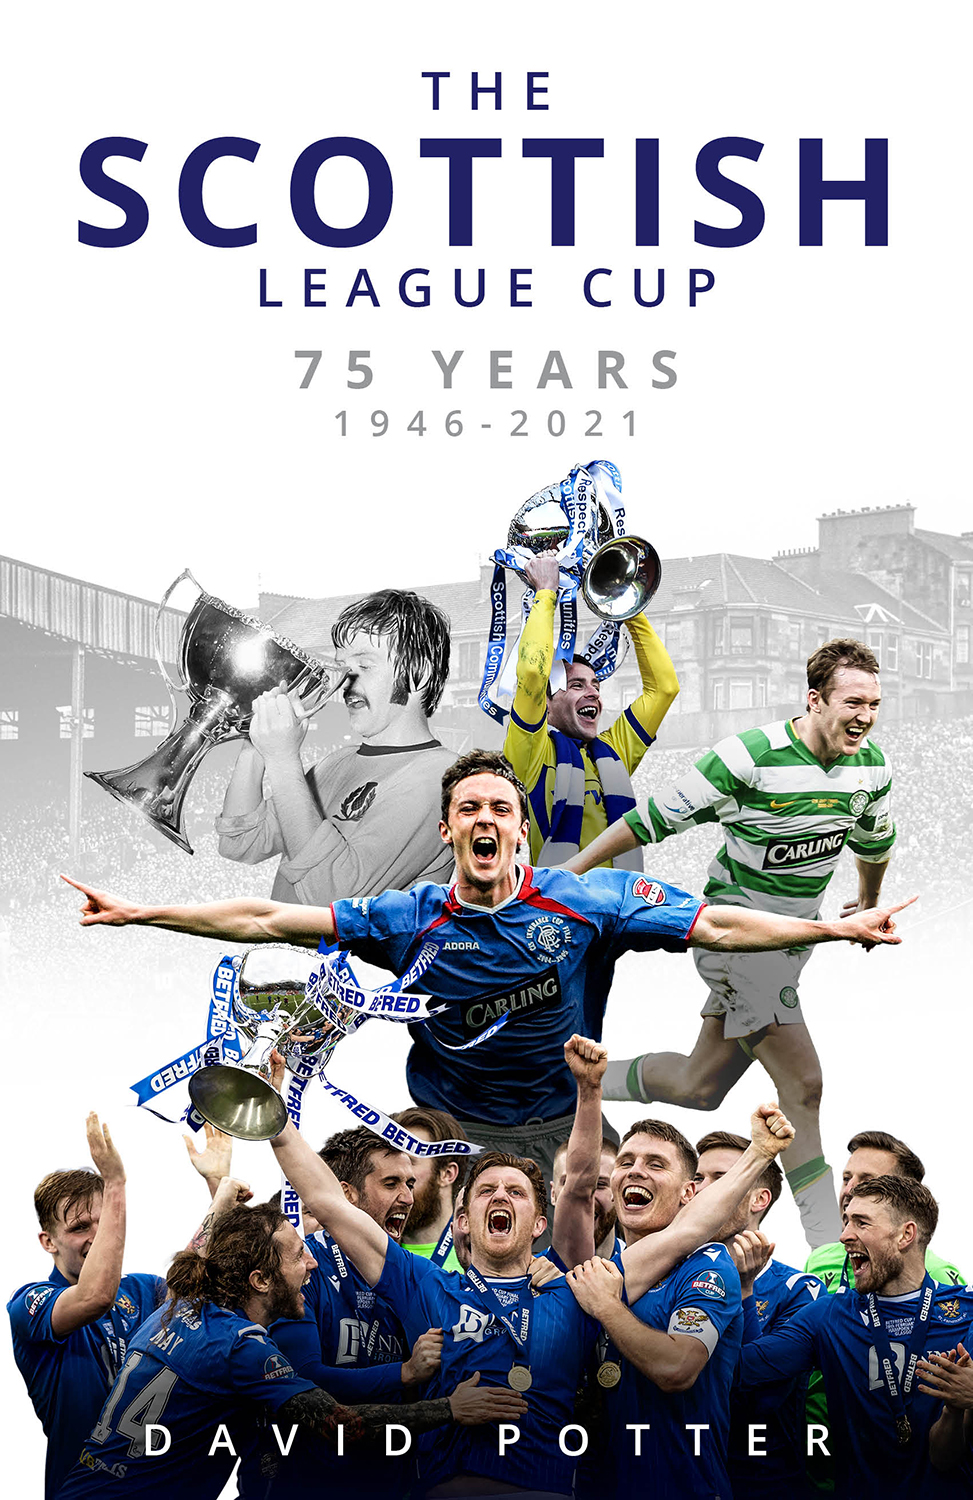 The Scottish League Cup